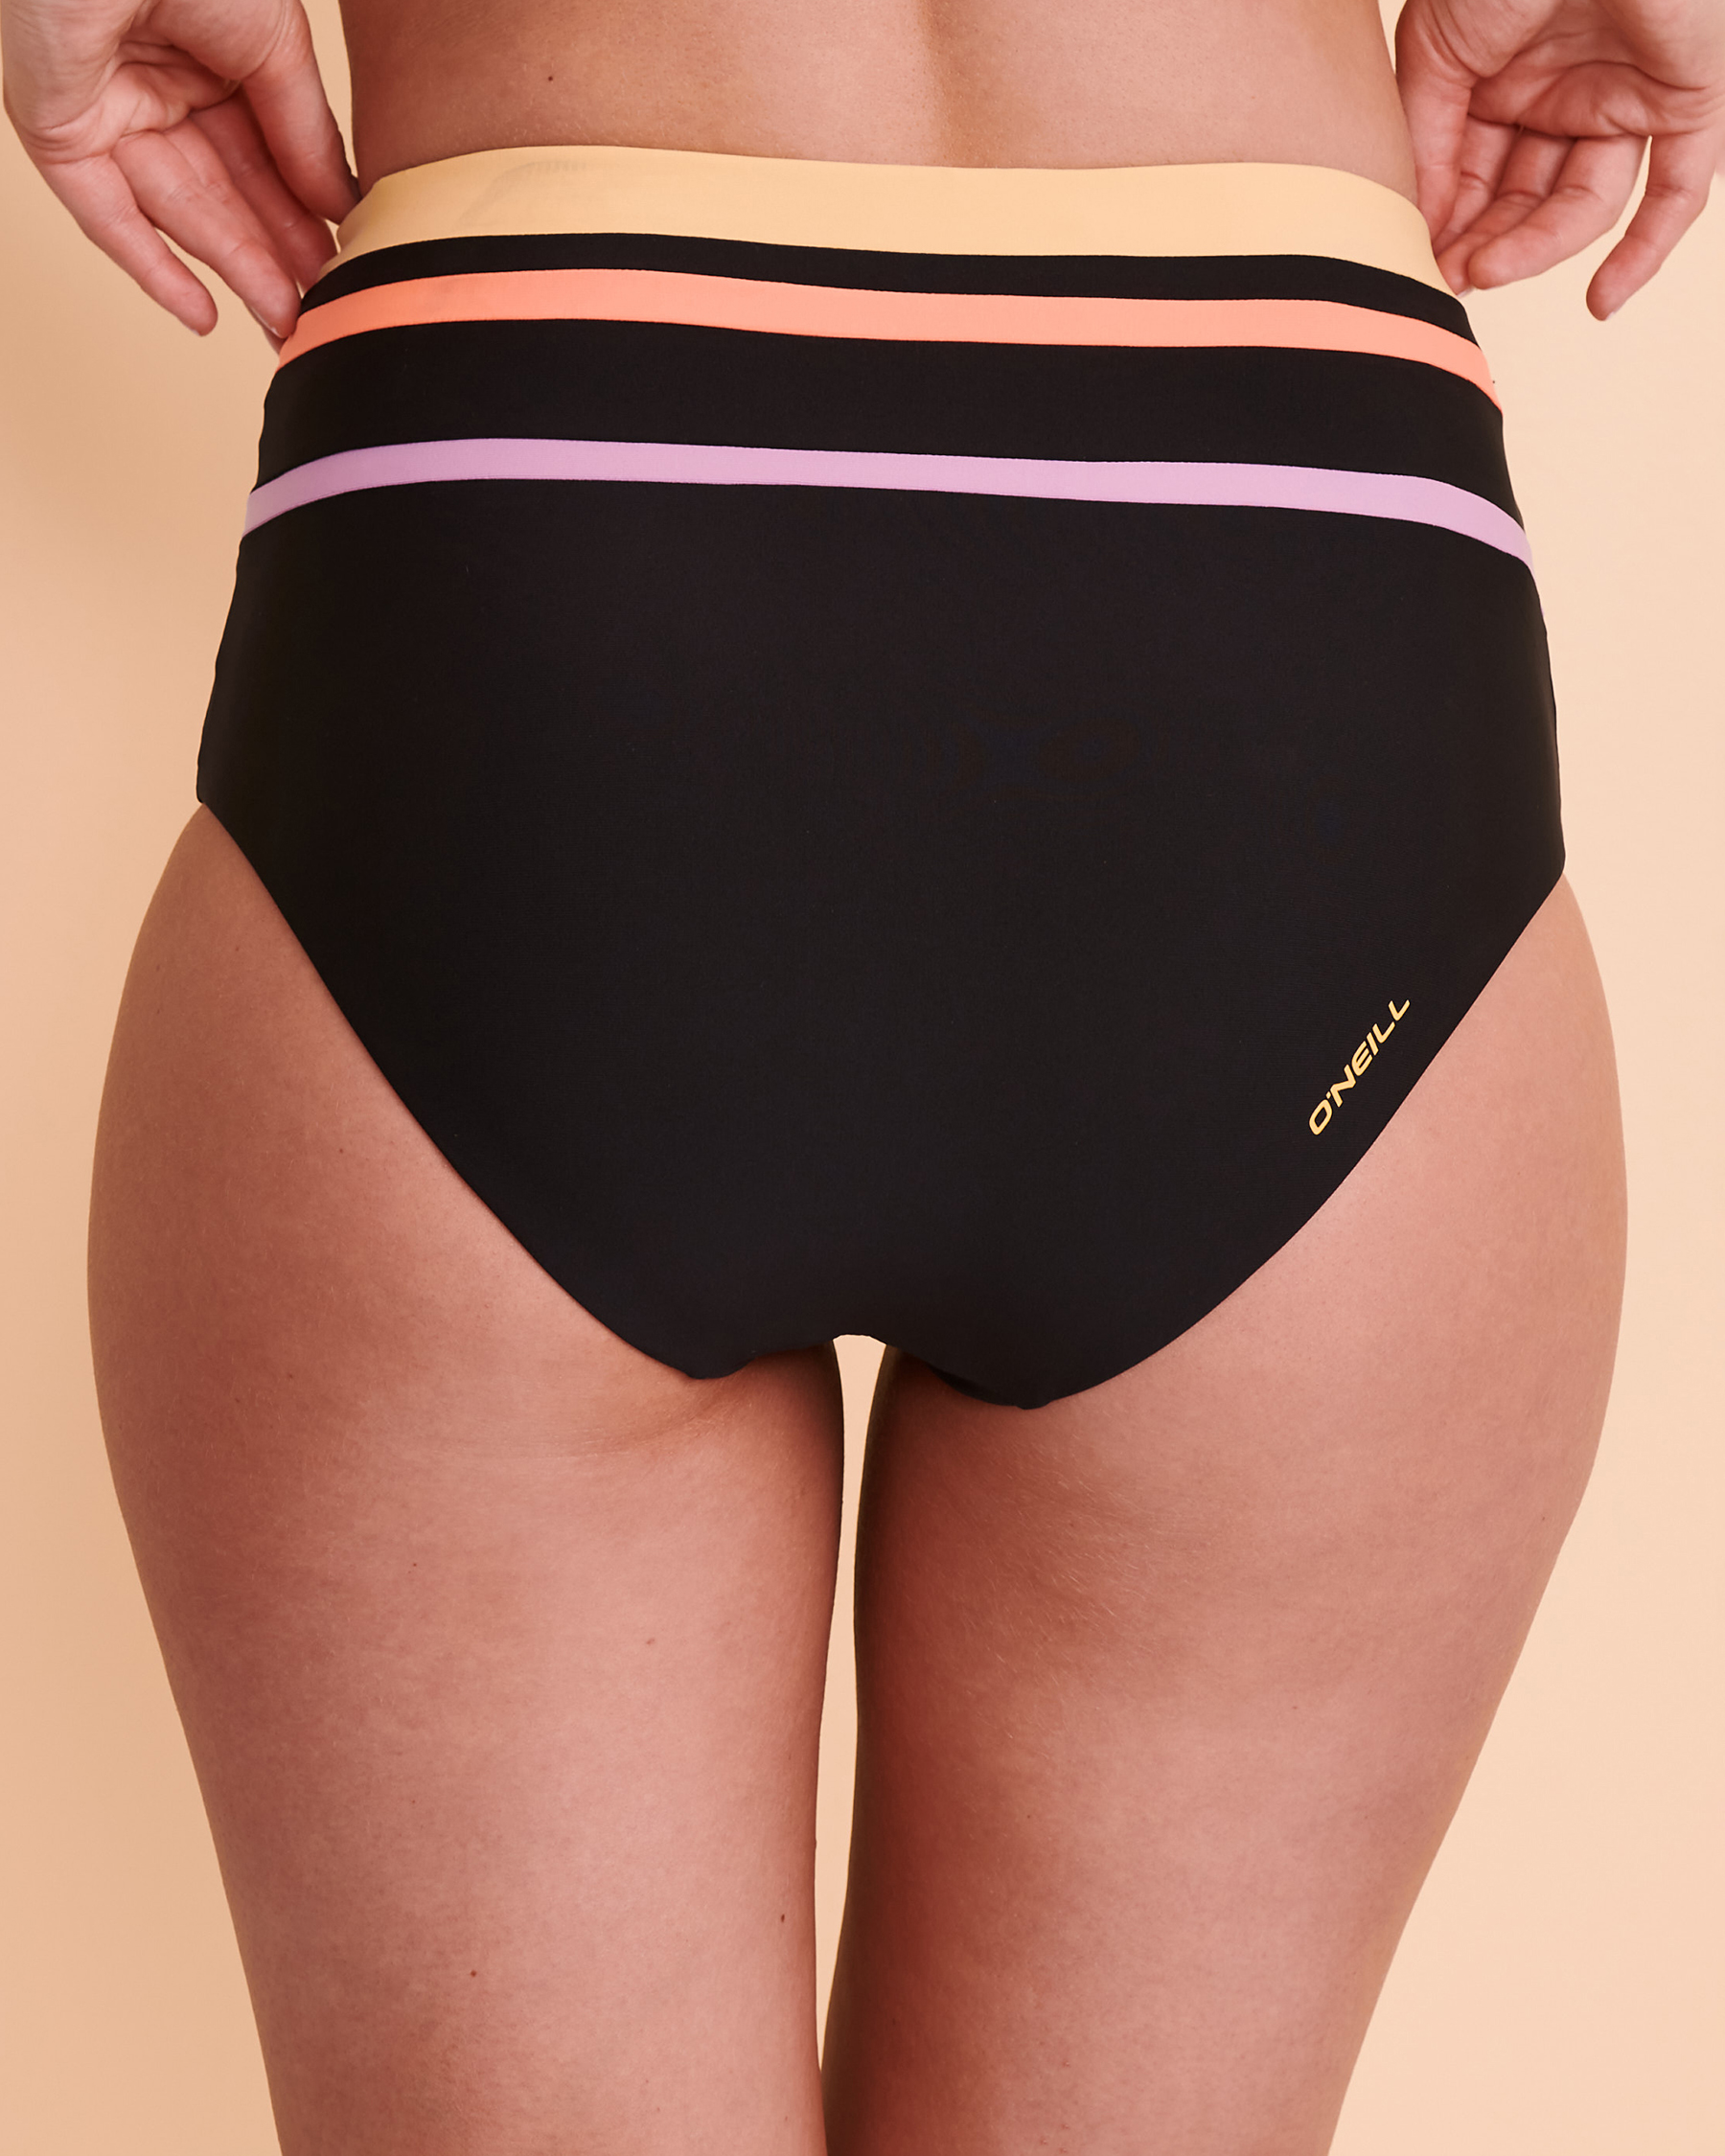 O'NEILL CORI High Waist Bikini Bottom Colorblock 1800002B - View3